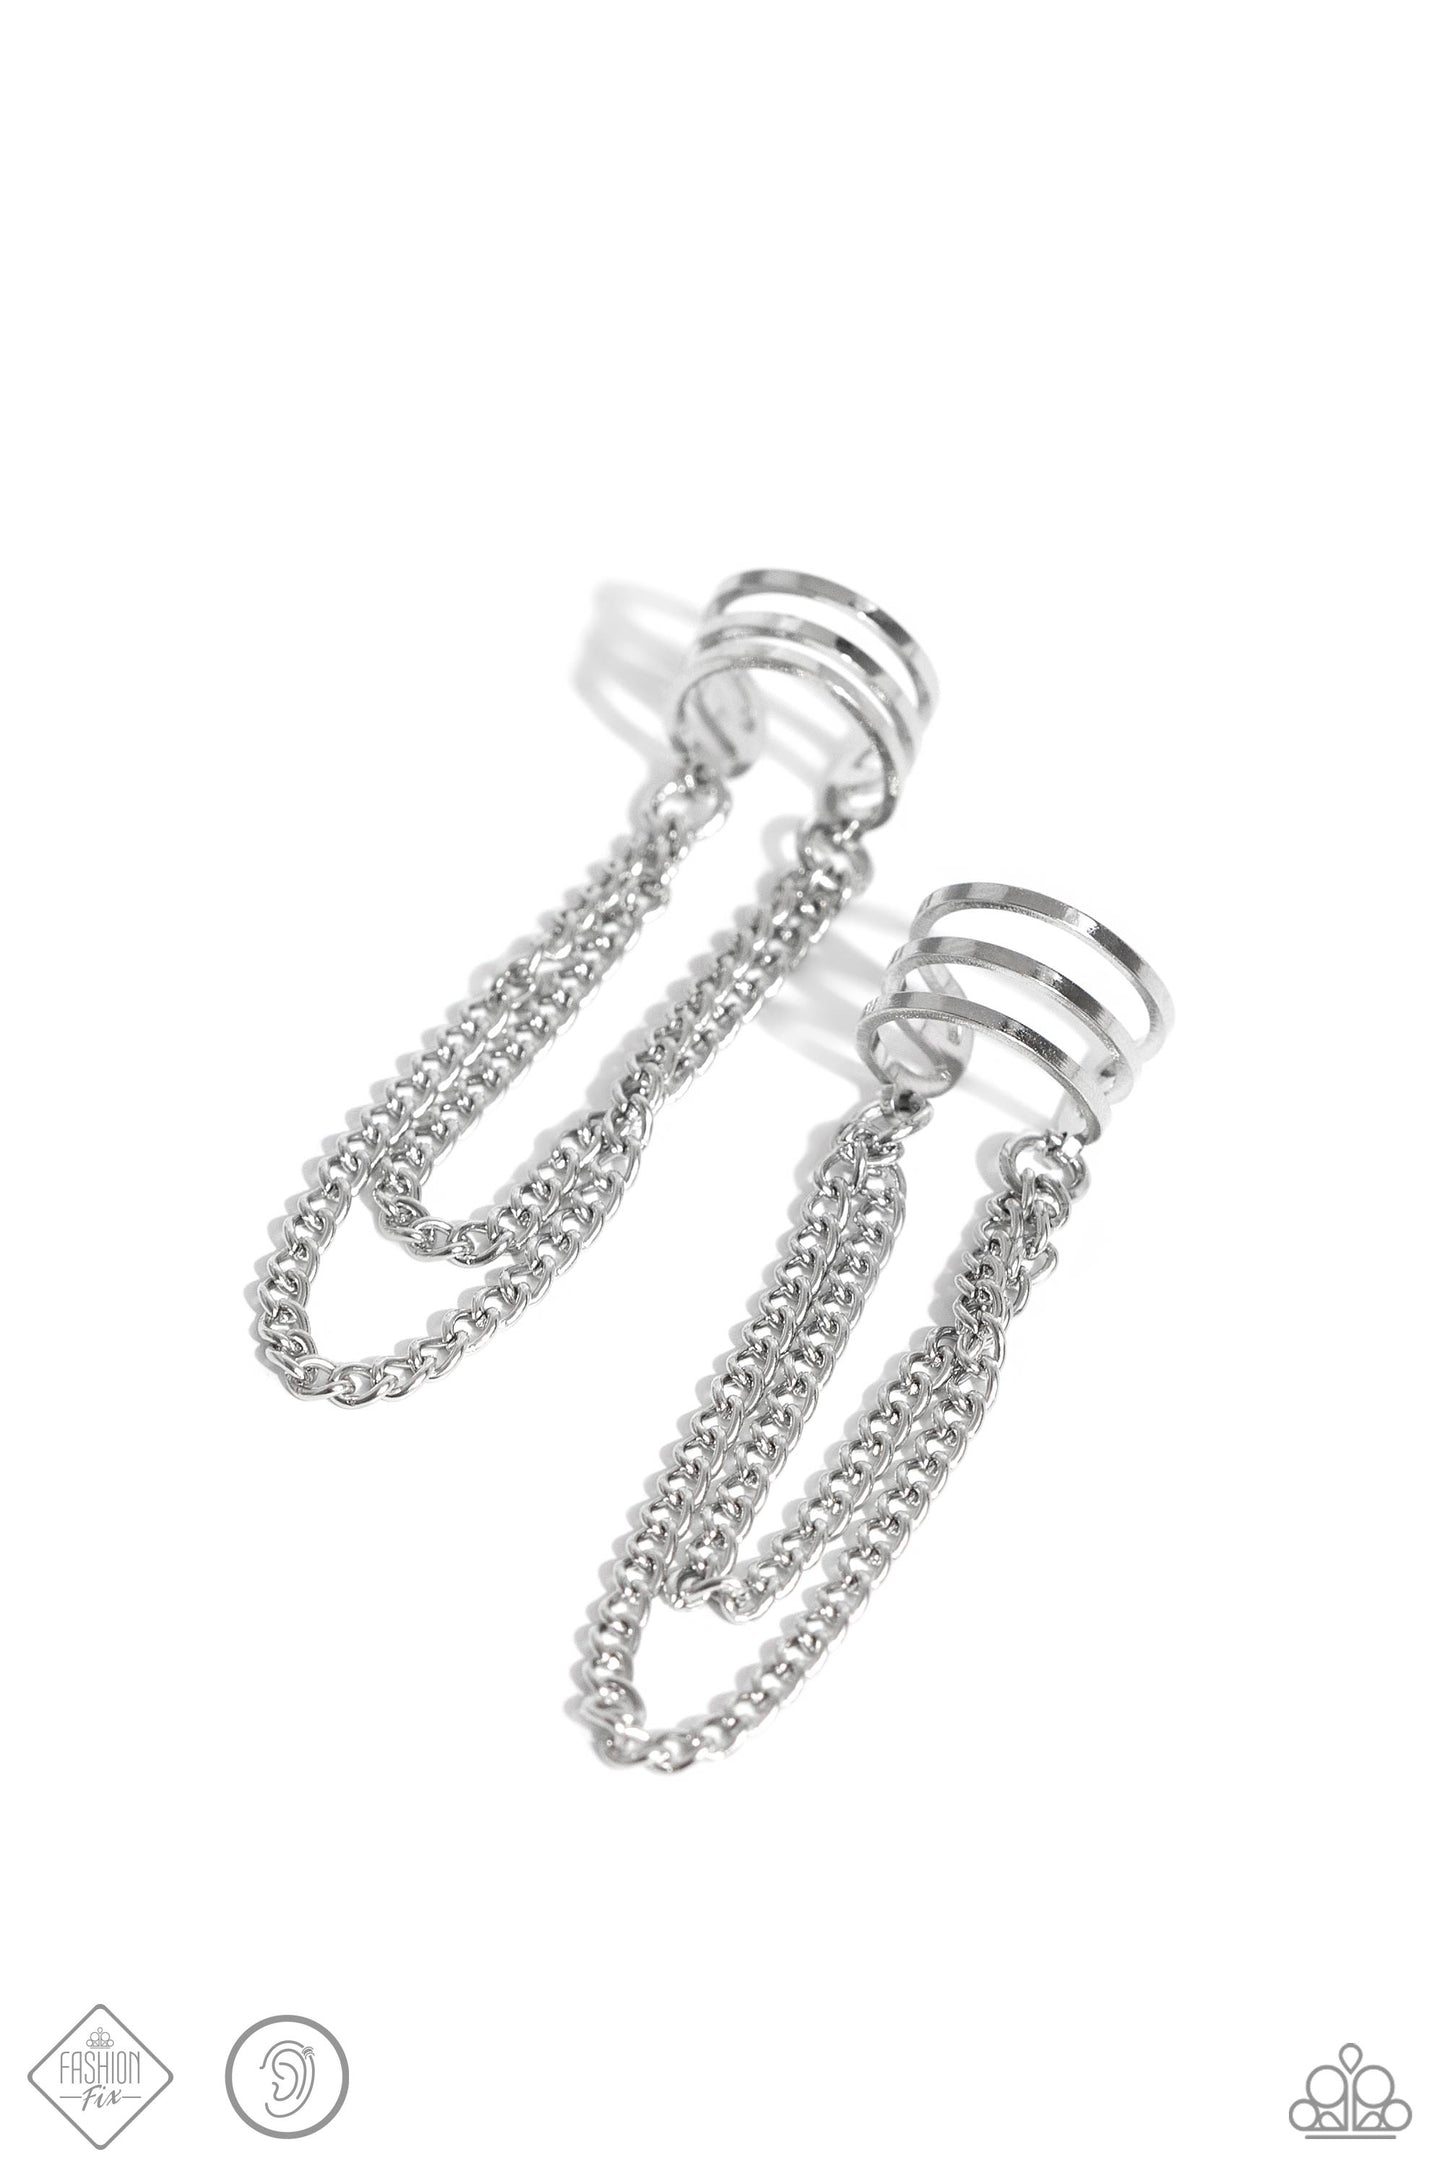 Unlocked Perfection - Silver Cuff Earrings - Fashion Fix